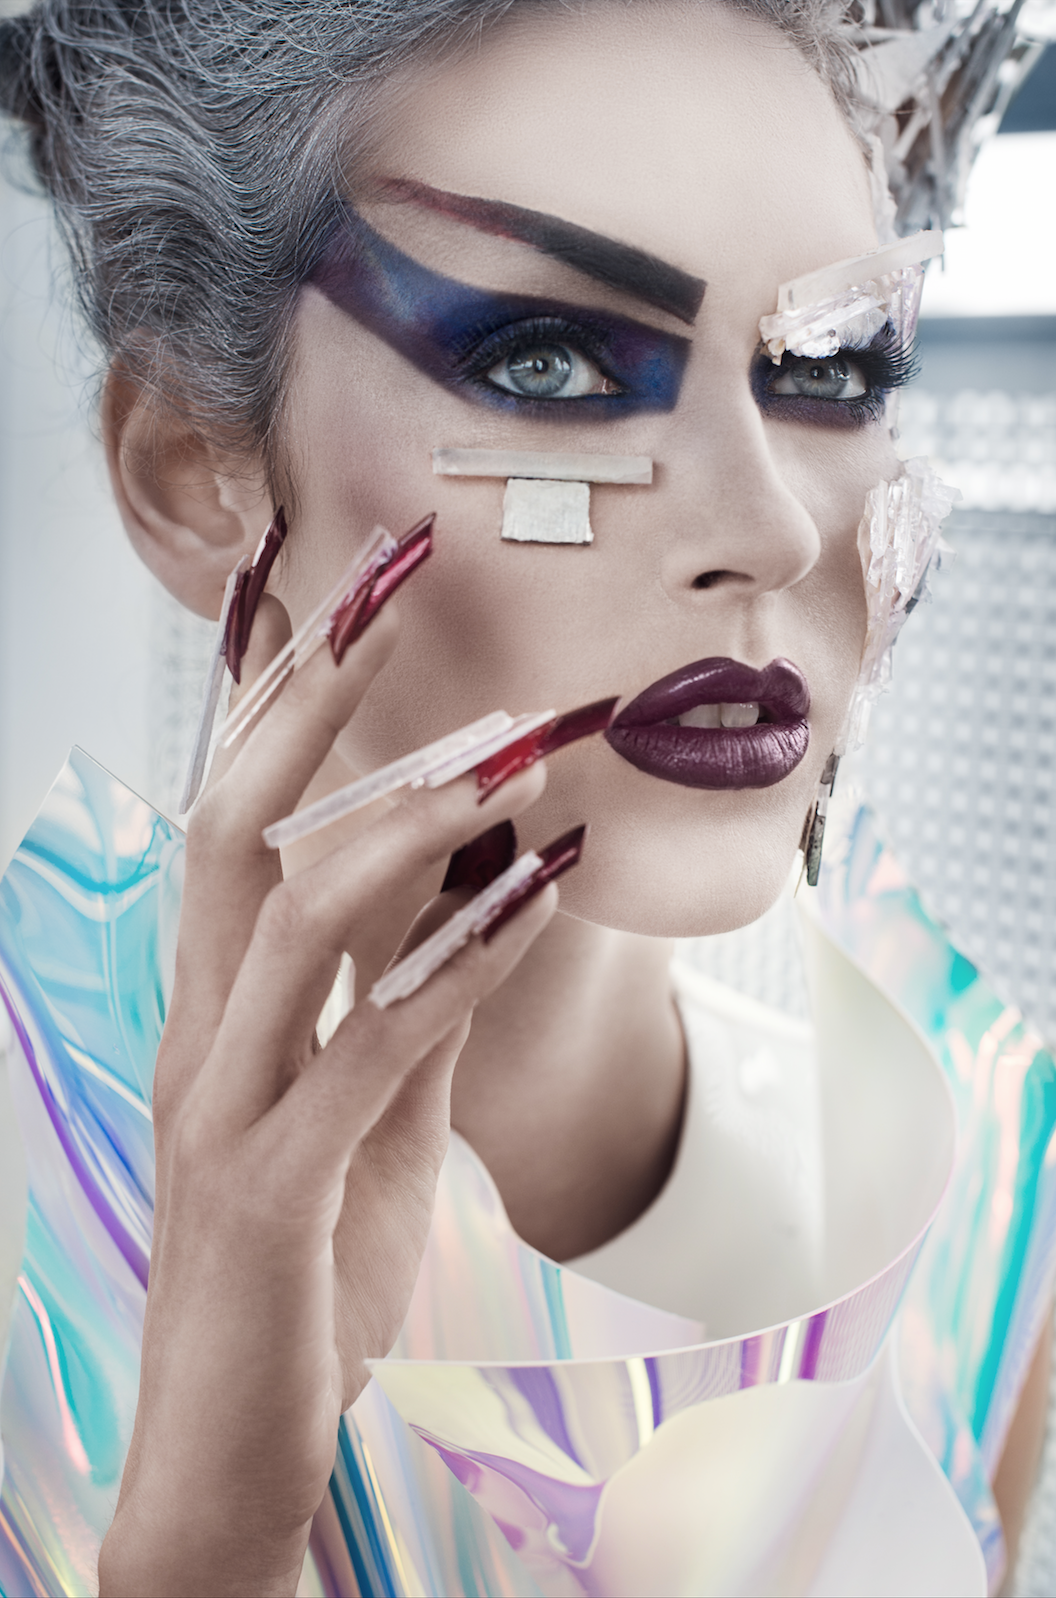 MUA makeup makeupart editorial beauty design faceprops headpiece accesories creativemakeup nailart arhitecture London beautyphotography fashionphotography